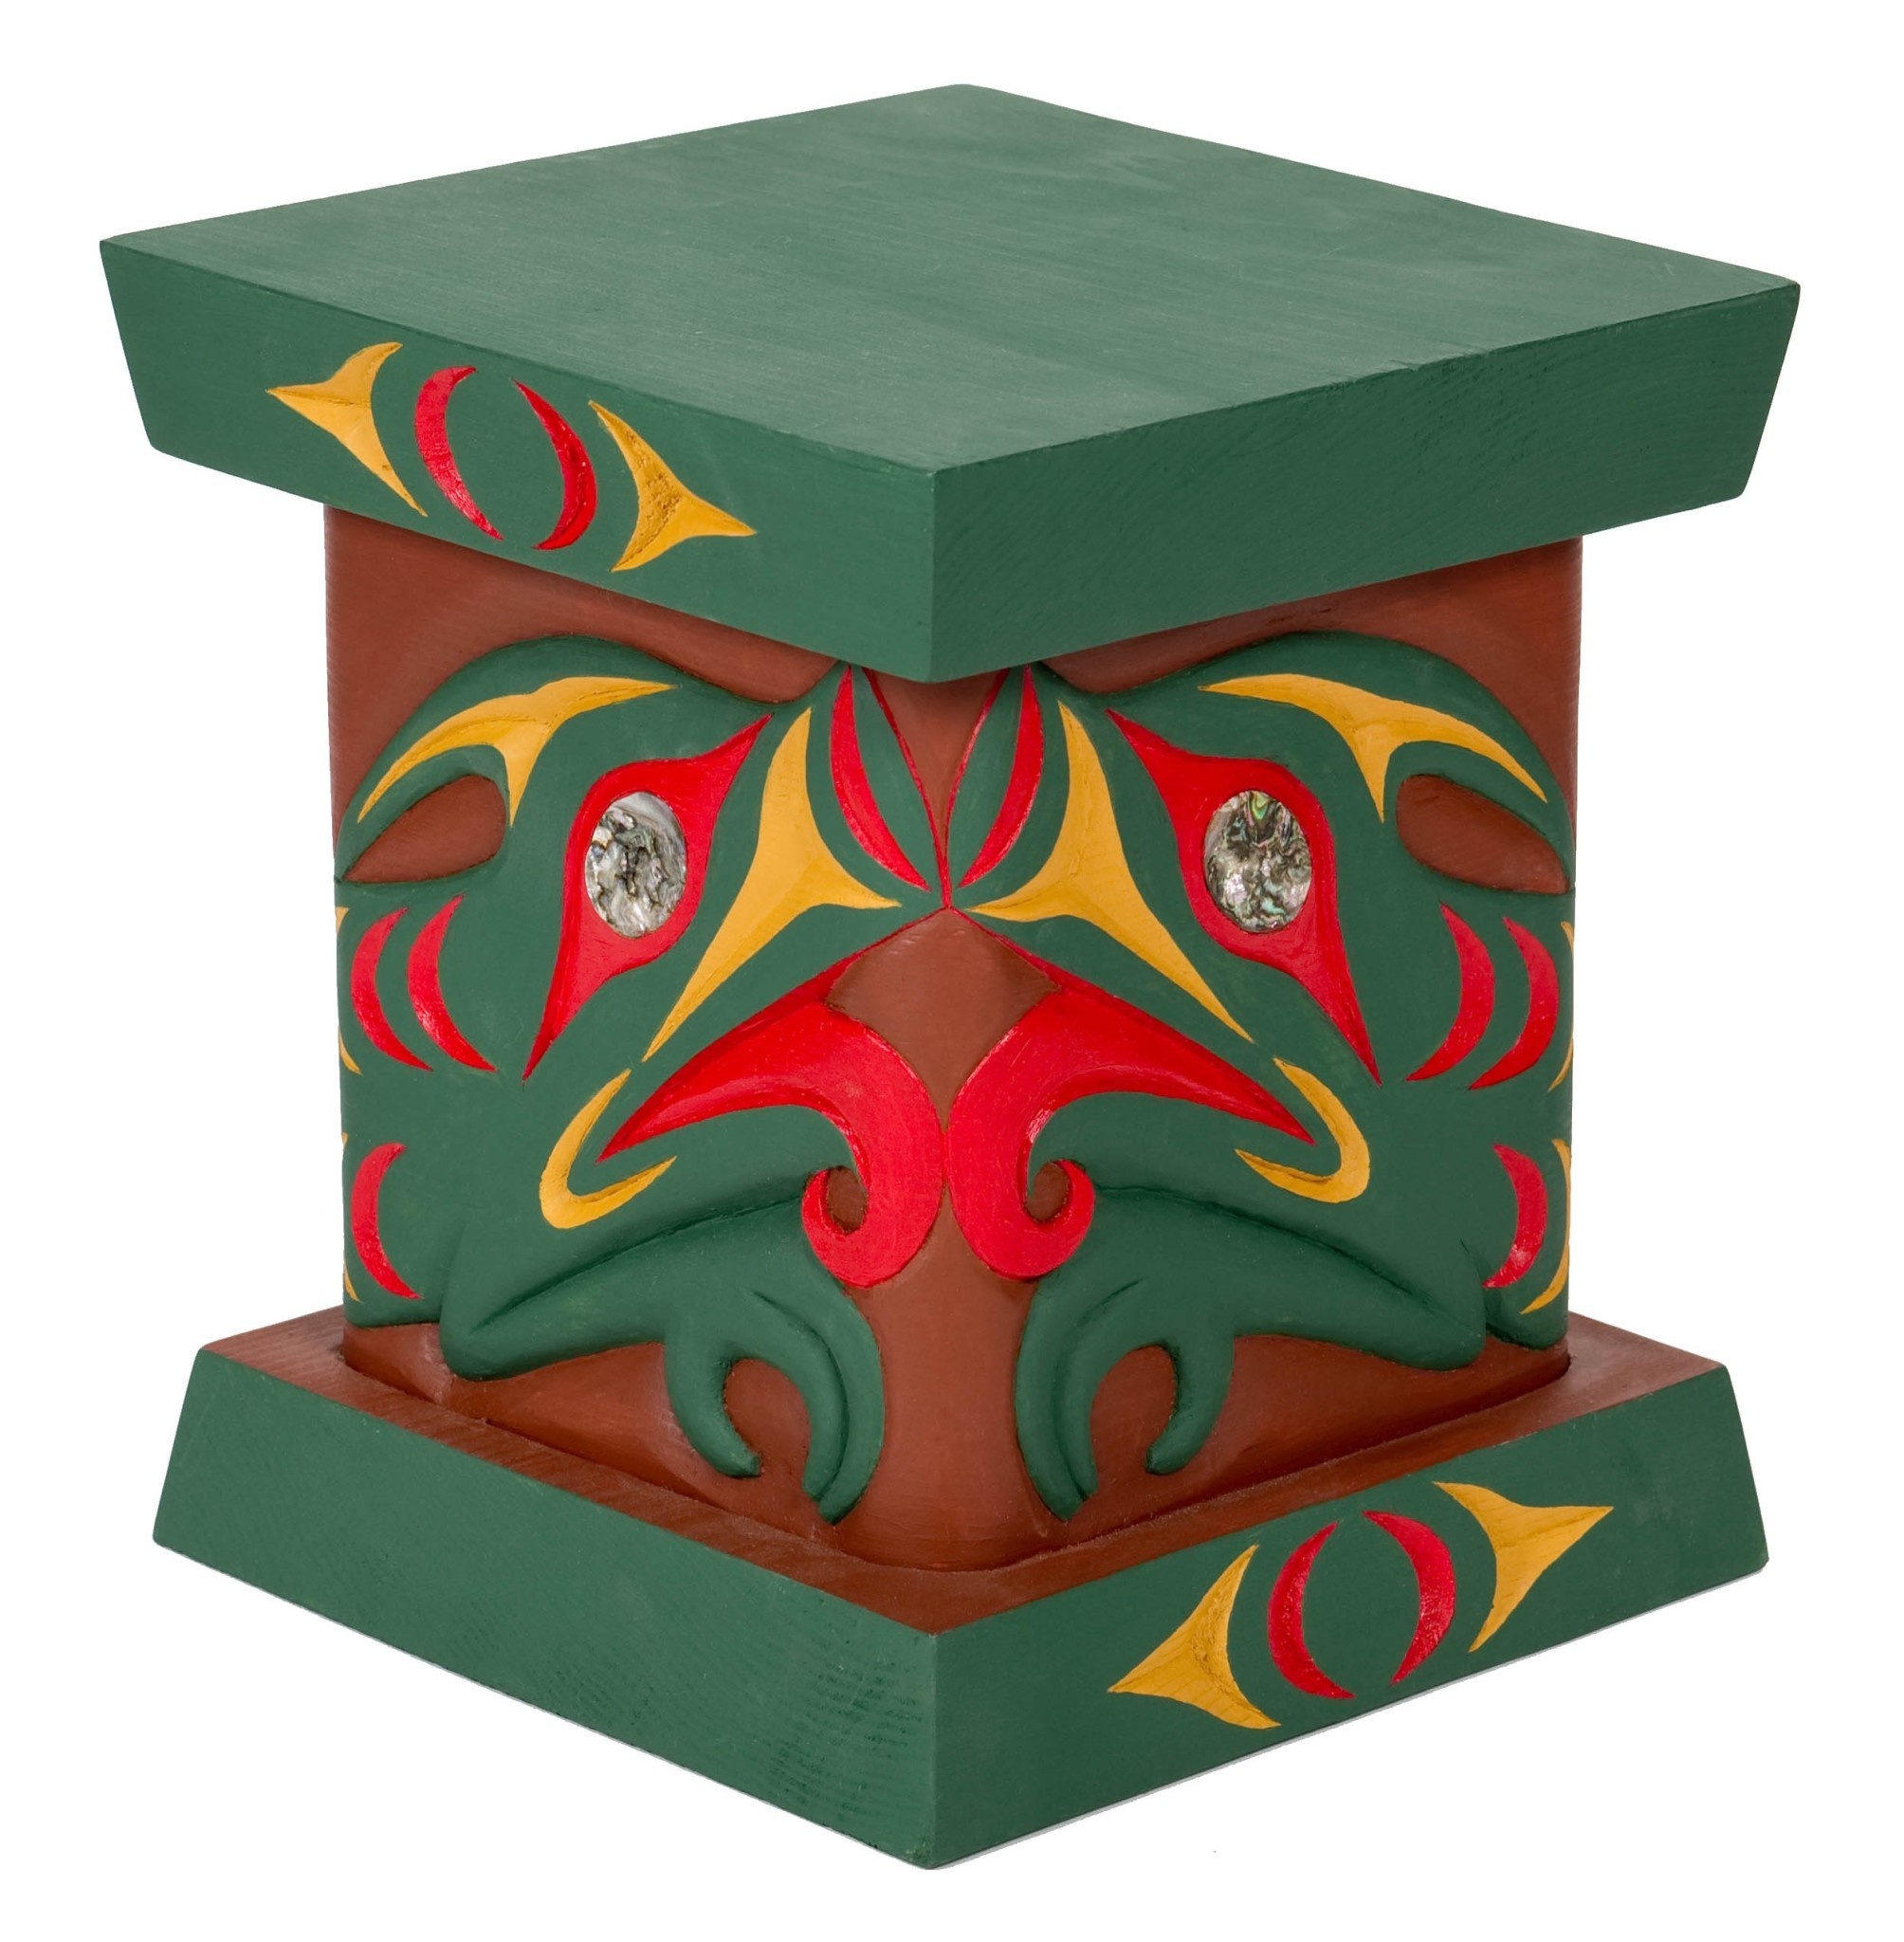 Bent Box with Salish Serpent Design